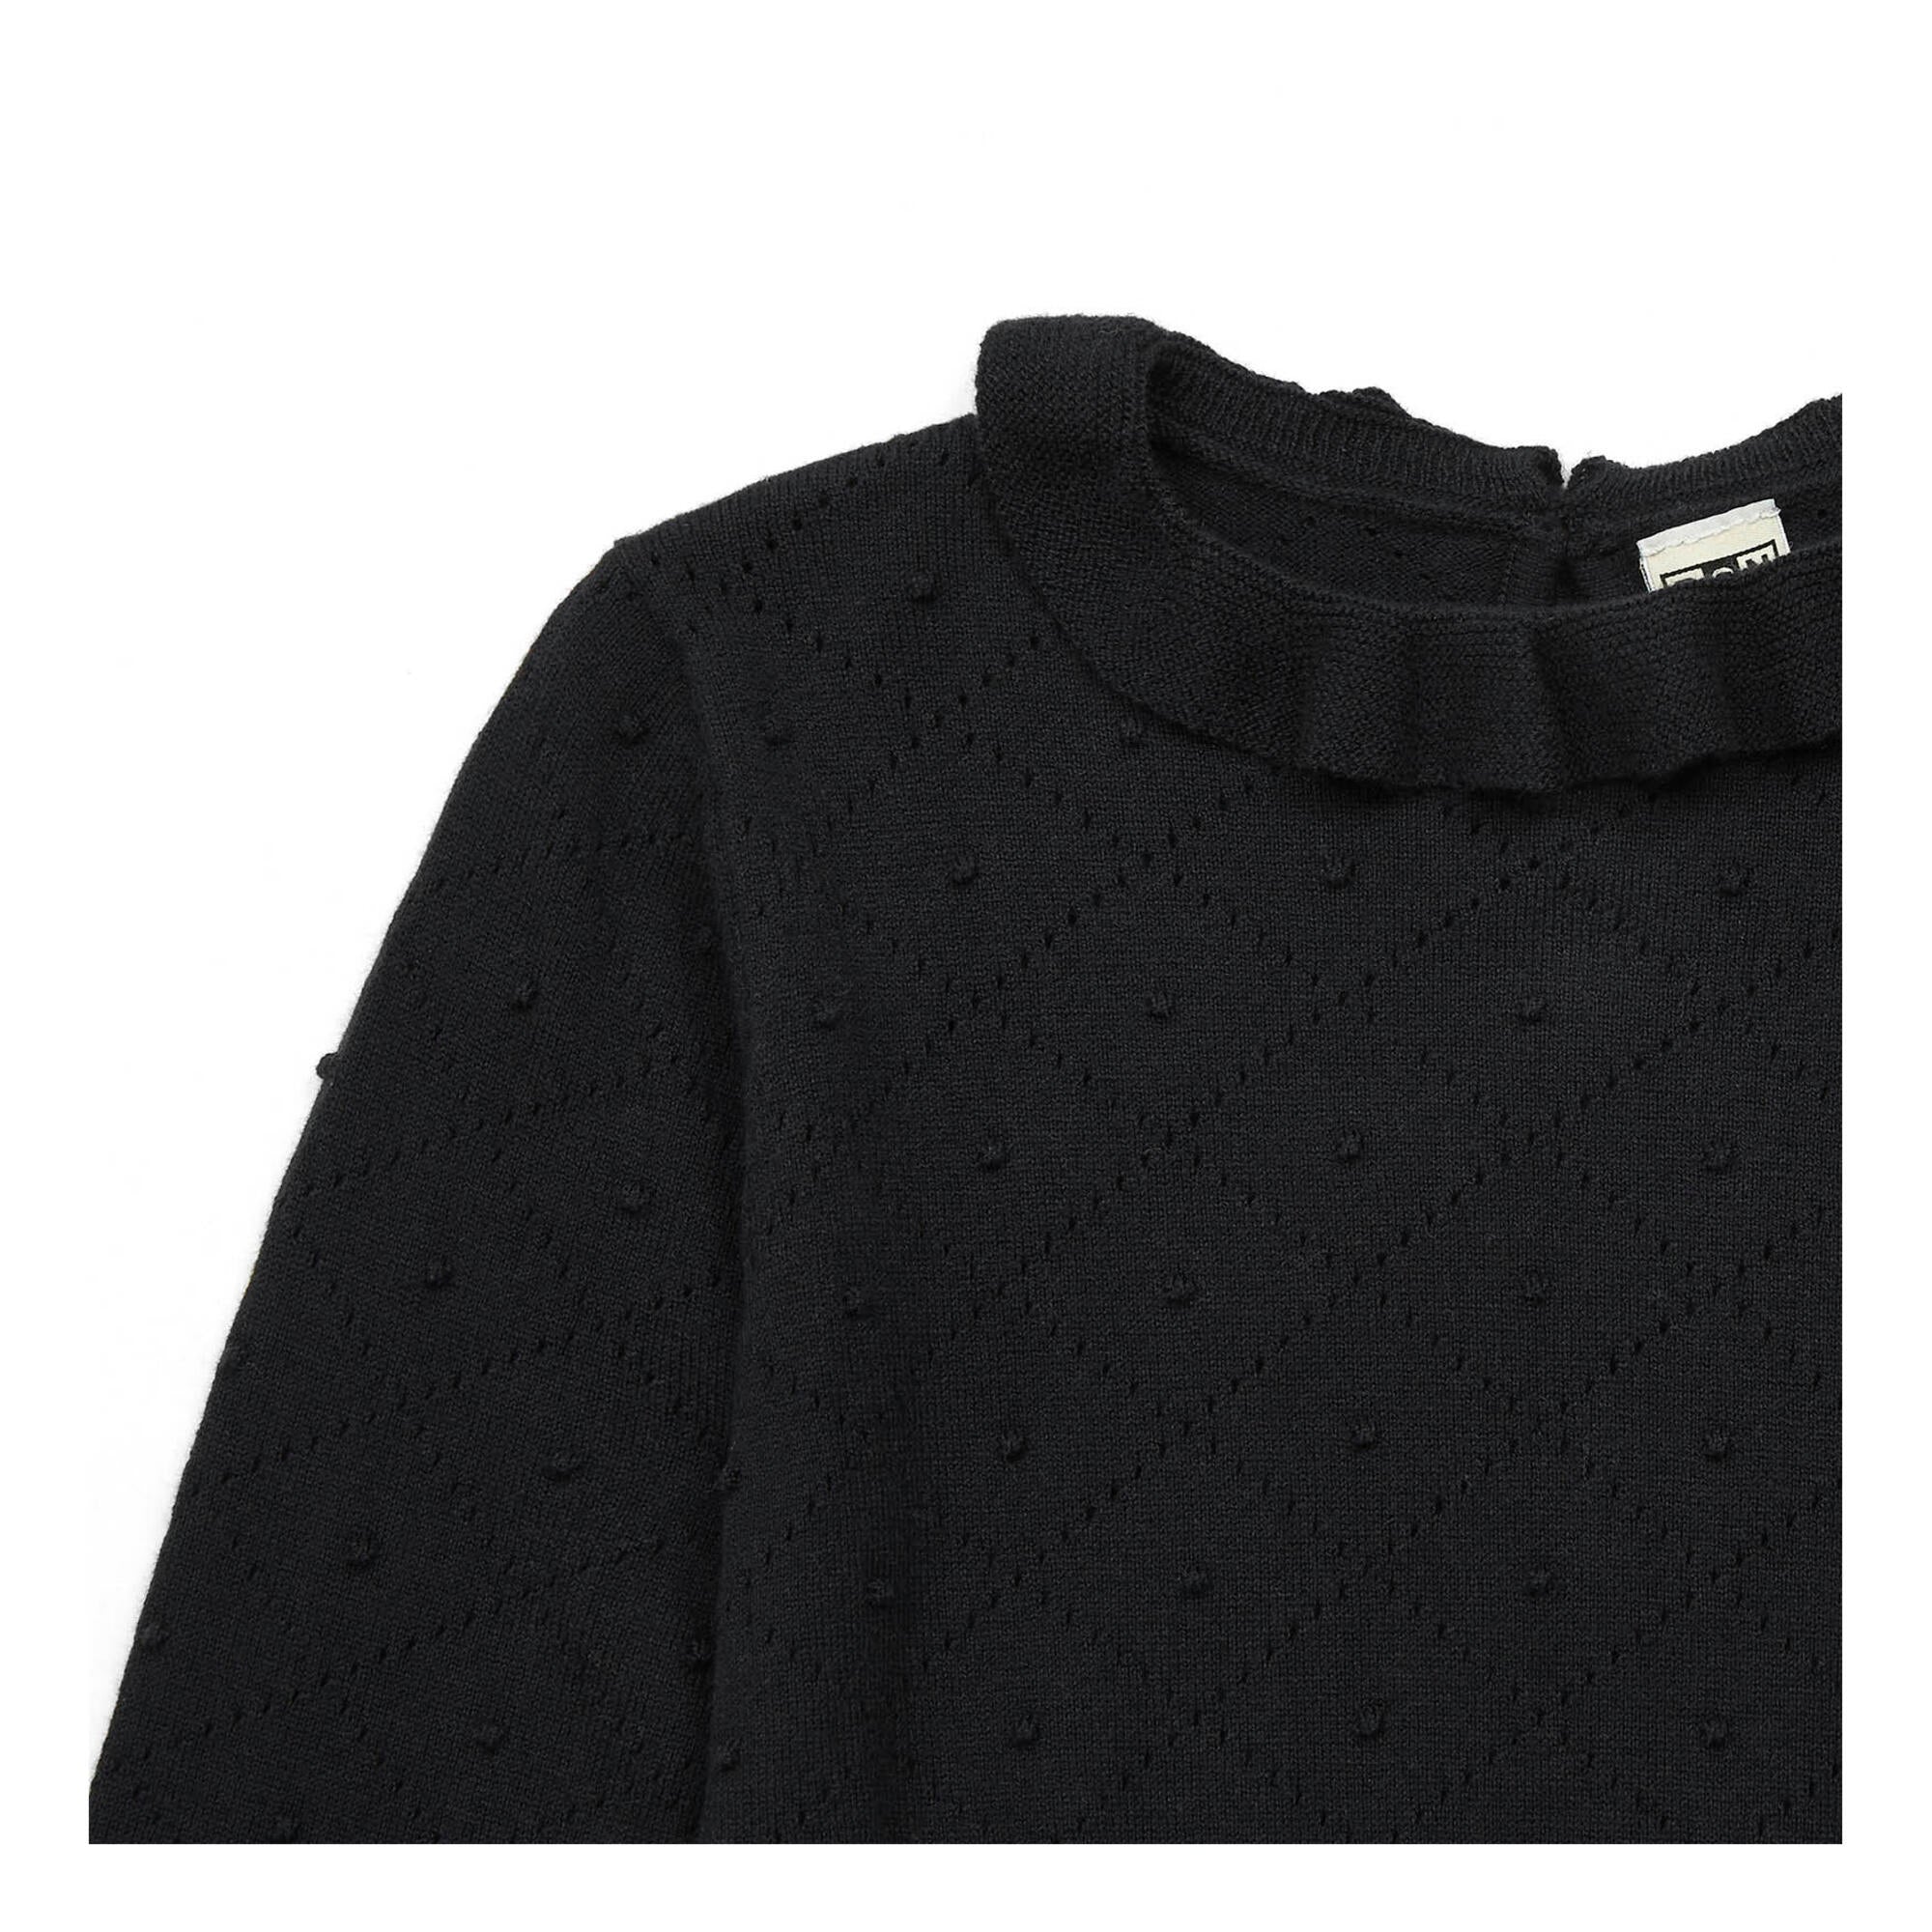 Girls Black Hollow Sweater